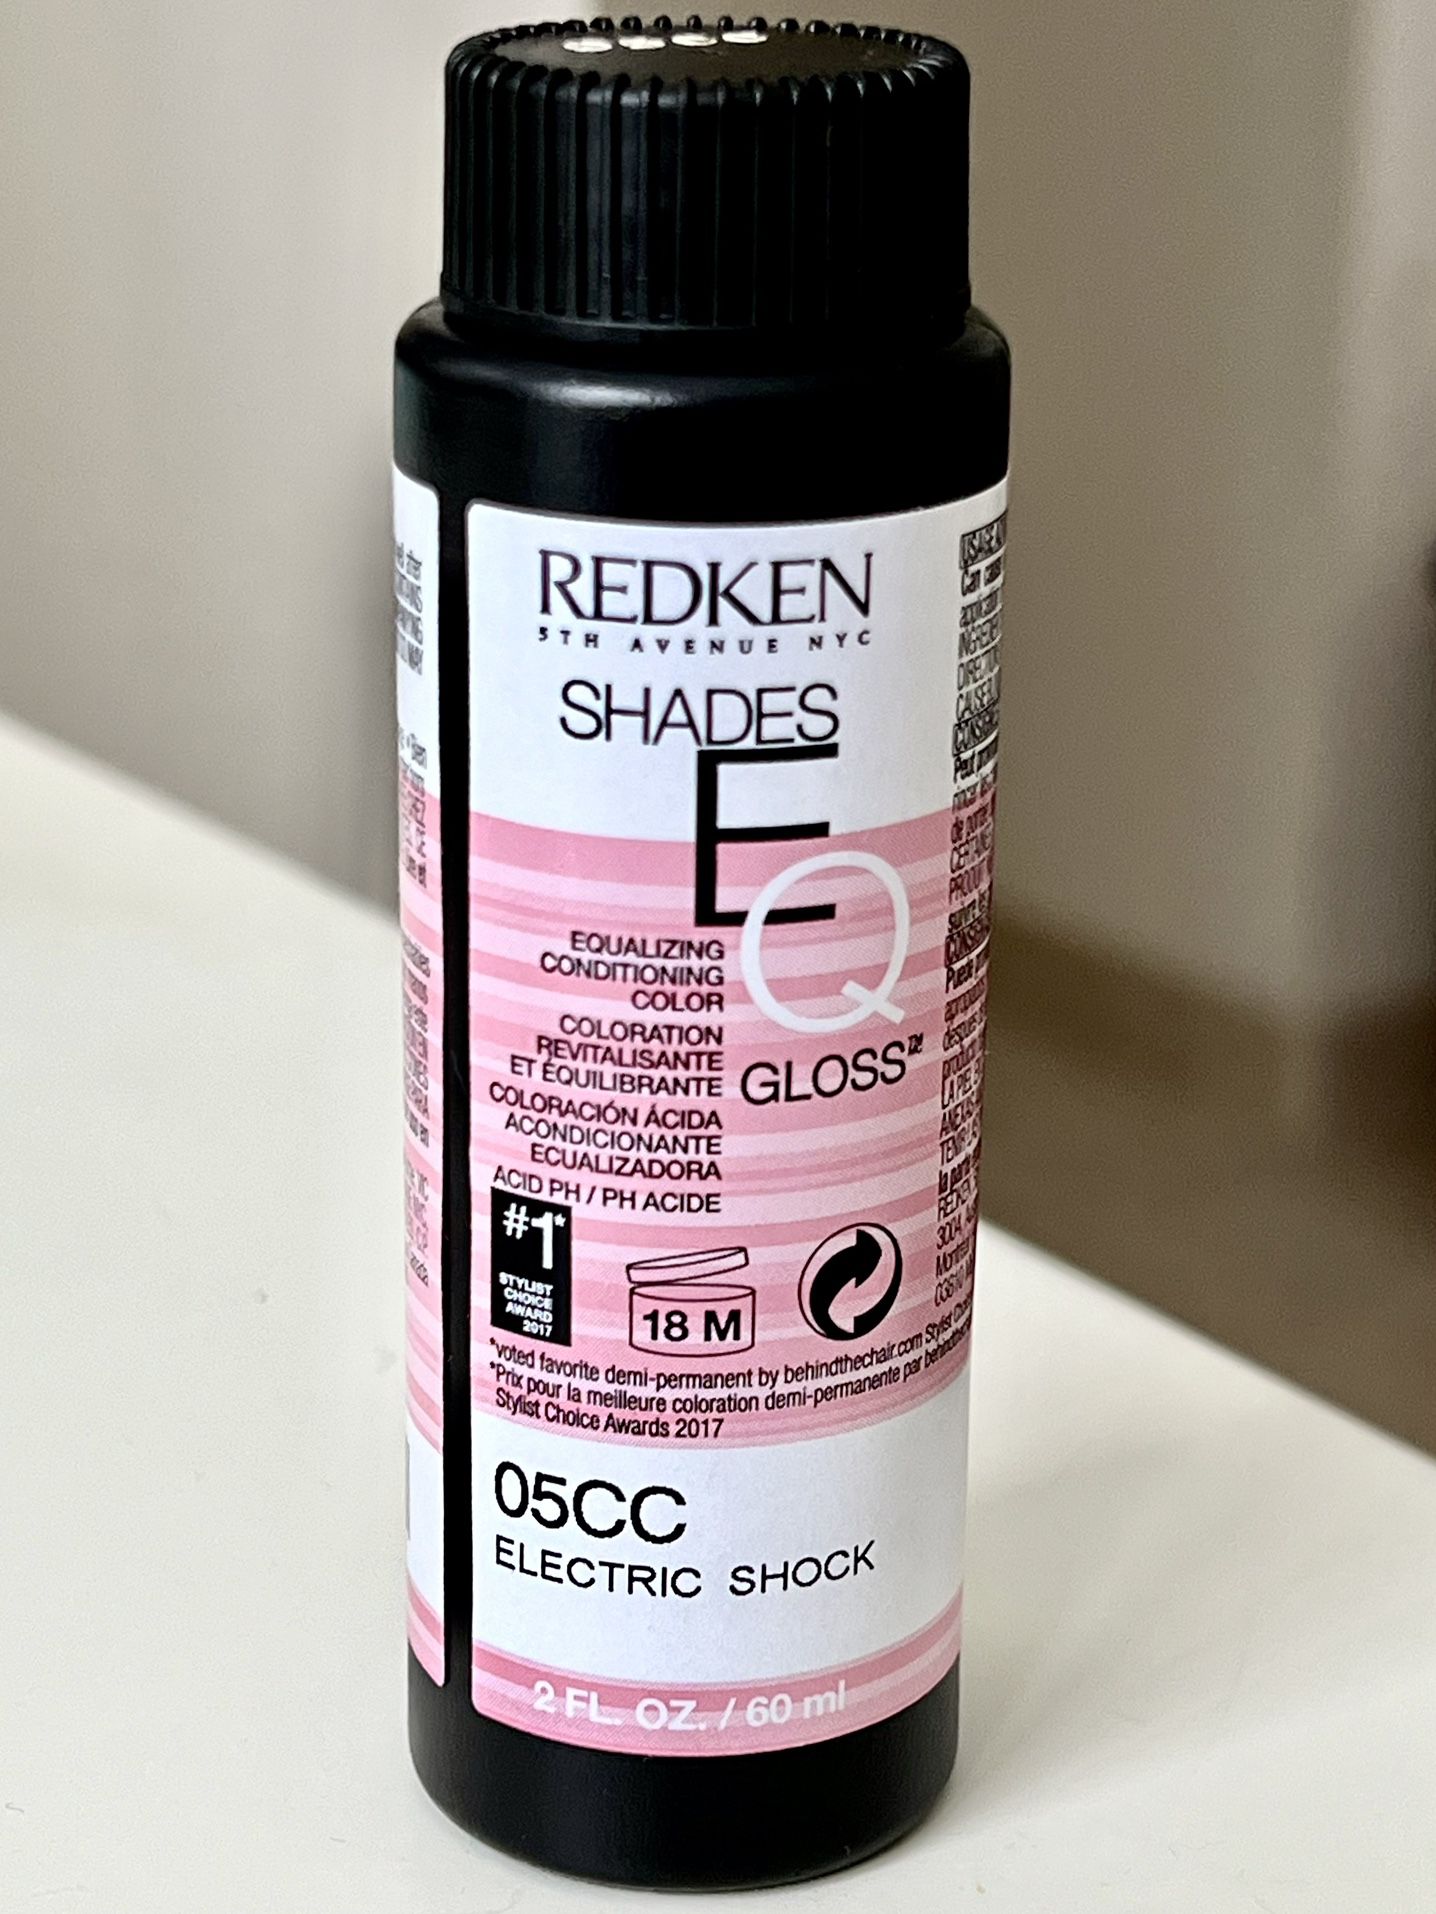 Redken Shades EQ Demi-Permanent Gloss 05CC ‘Electric Shock'